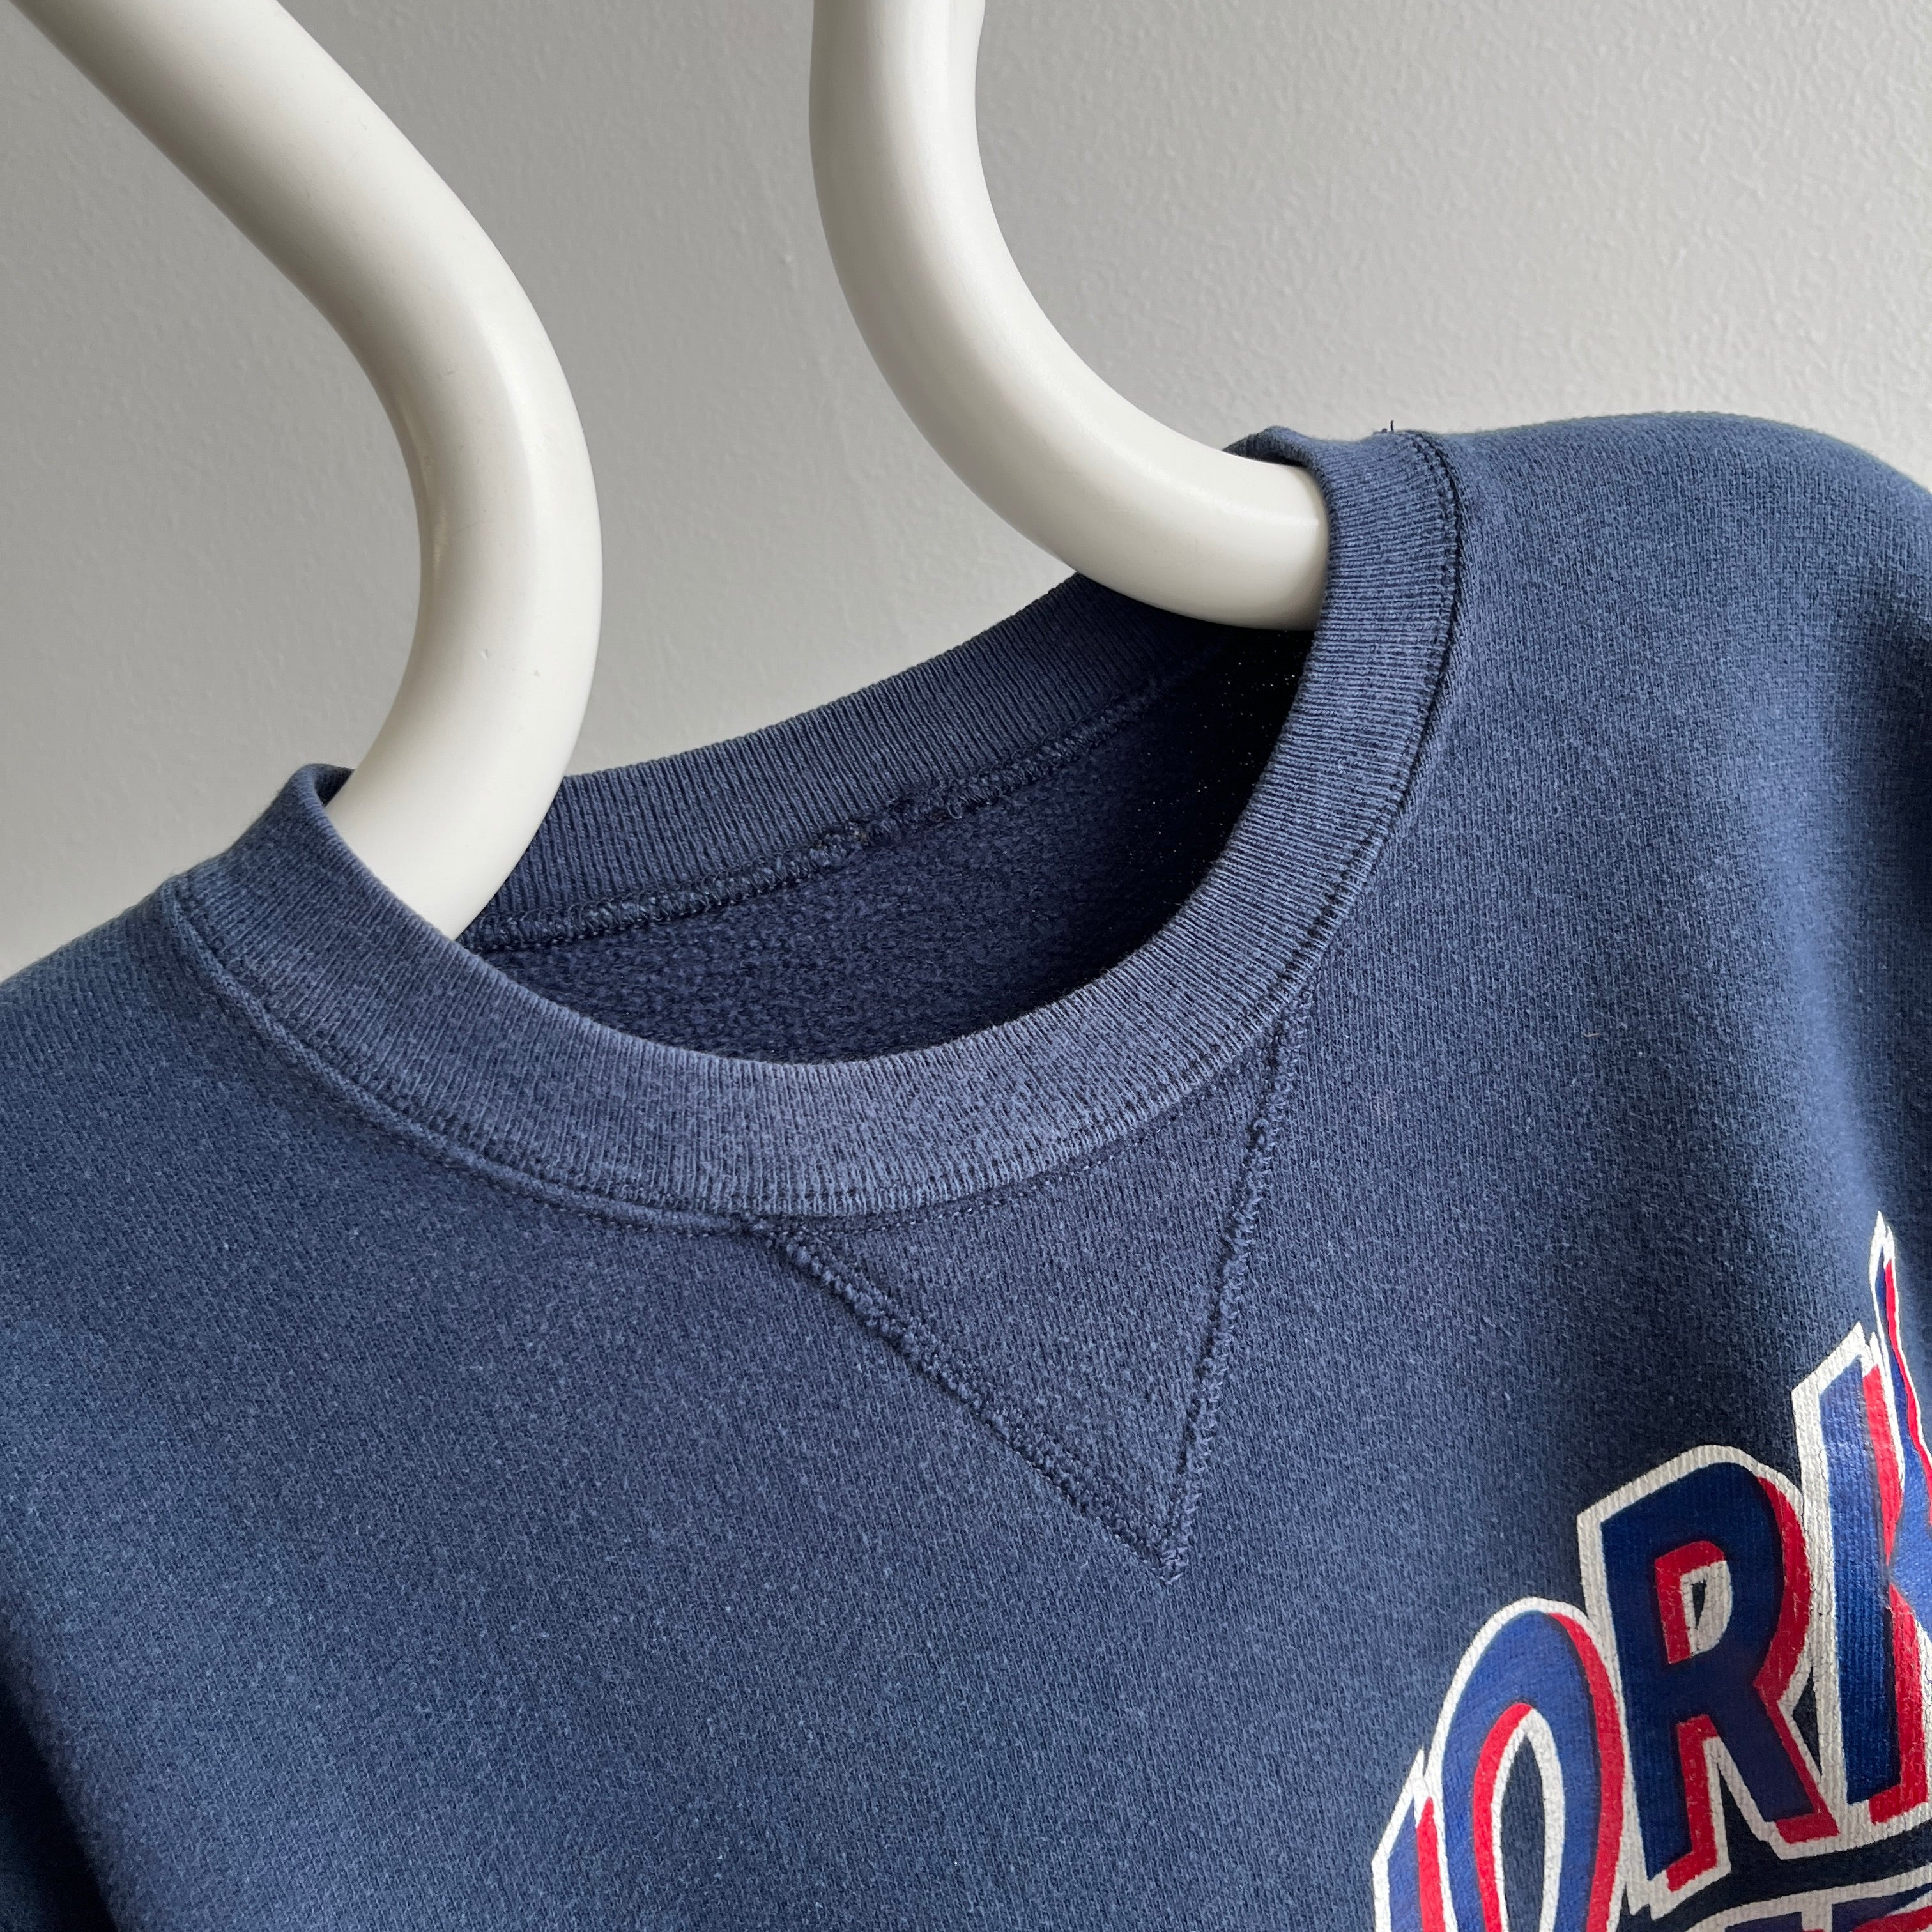 1989 New York Yankees Single V Super Collectible Sweatshirt - Soft and Wonderful